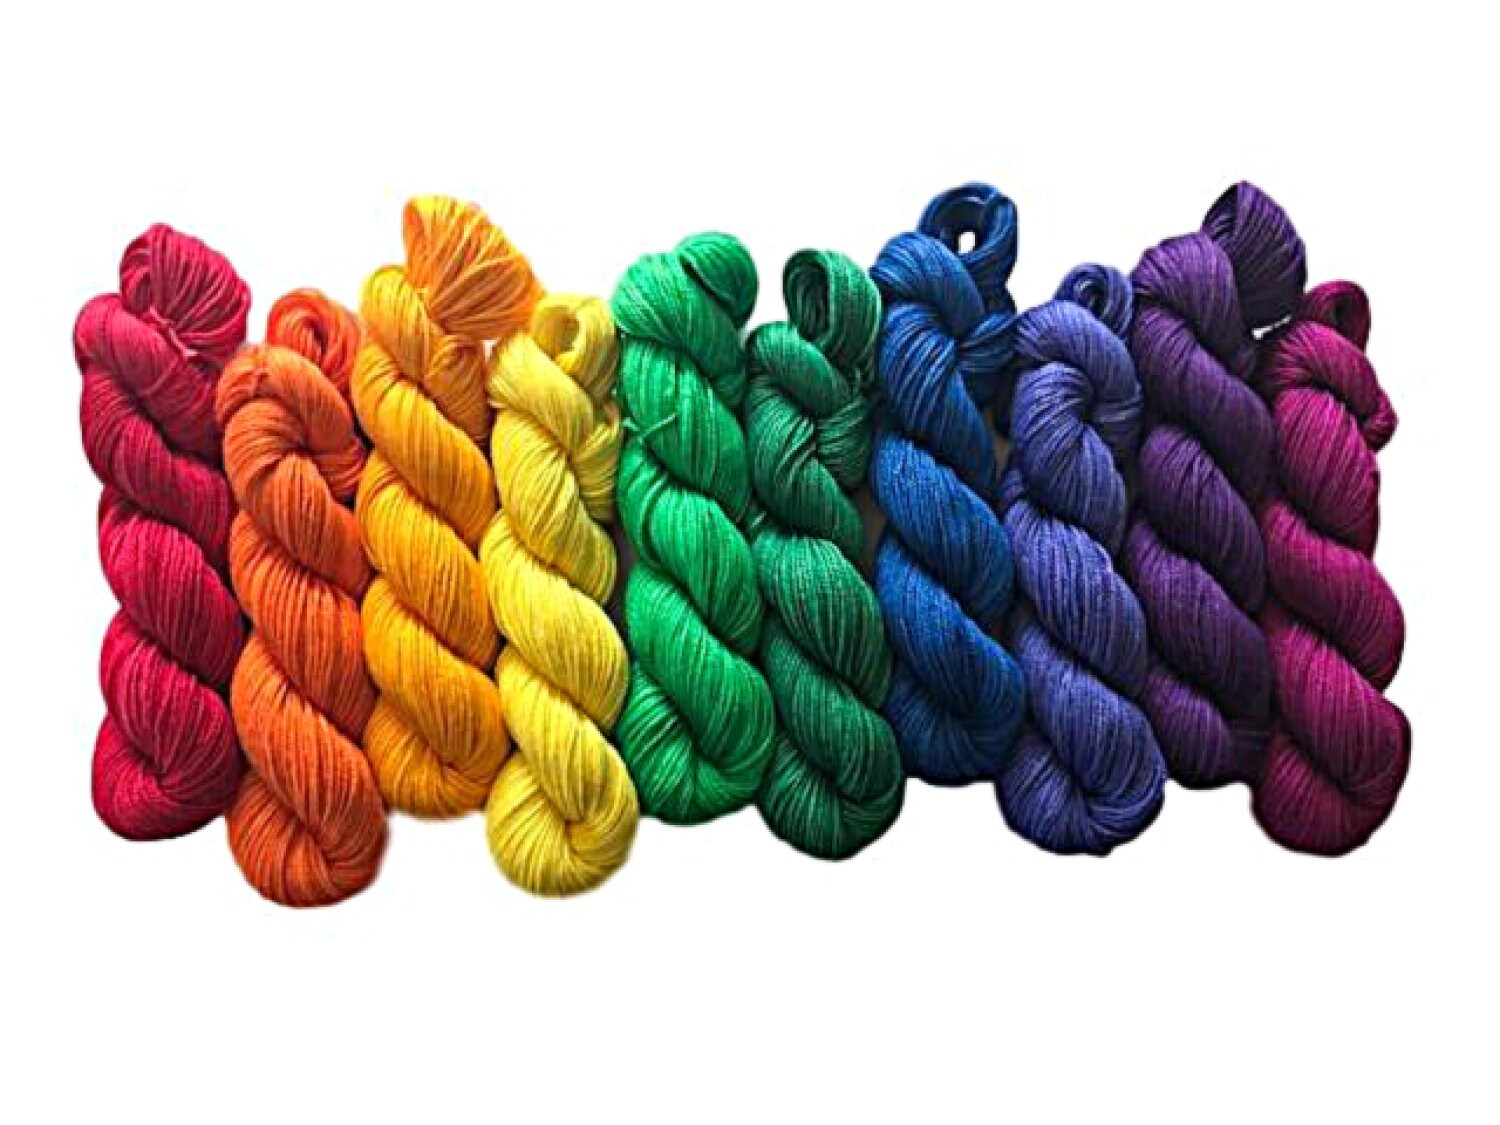 Rainbow Hand Dyed Yarn Kit - Vegan Fiber (Bamboo Cotton) - Fingering Wt Mini Skeins - Indie Dyed Artisan 3 Ply Fiber - Semi Solids & Tonals